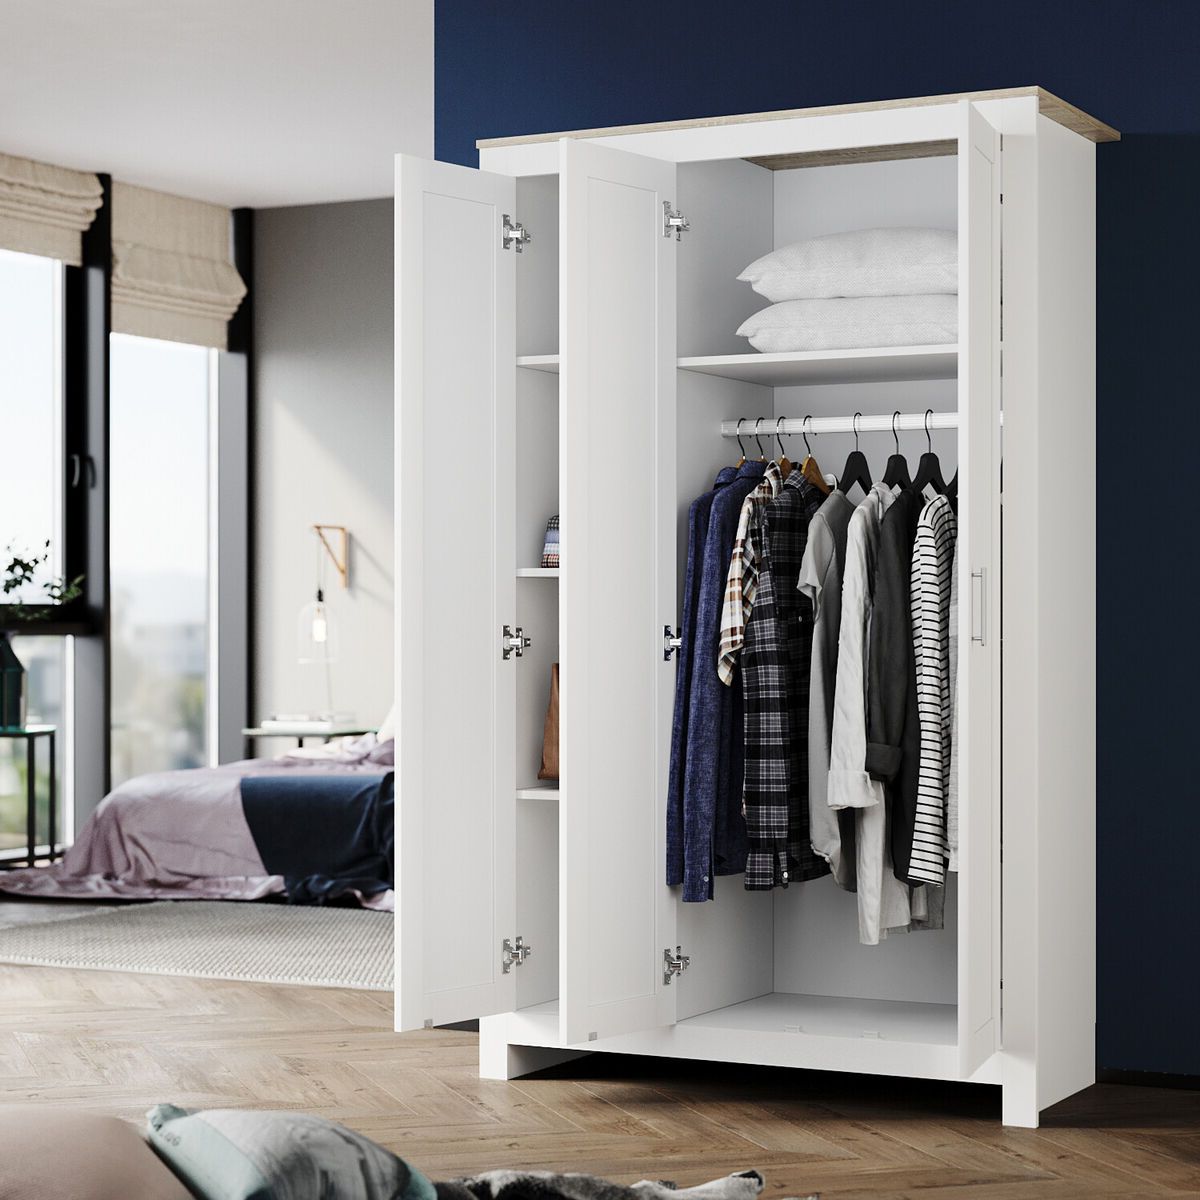 Matt White Gloss 3 Door Wardrobe Storage With Shelves Rail Bedroom Furniture  | Ebay Inside 5 Door Wardrobes Bedroom Furniture (View 15 of 20)